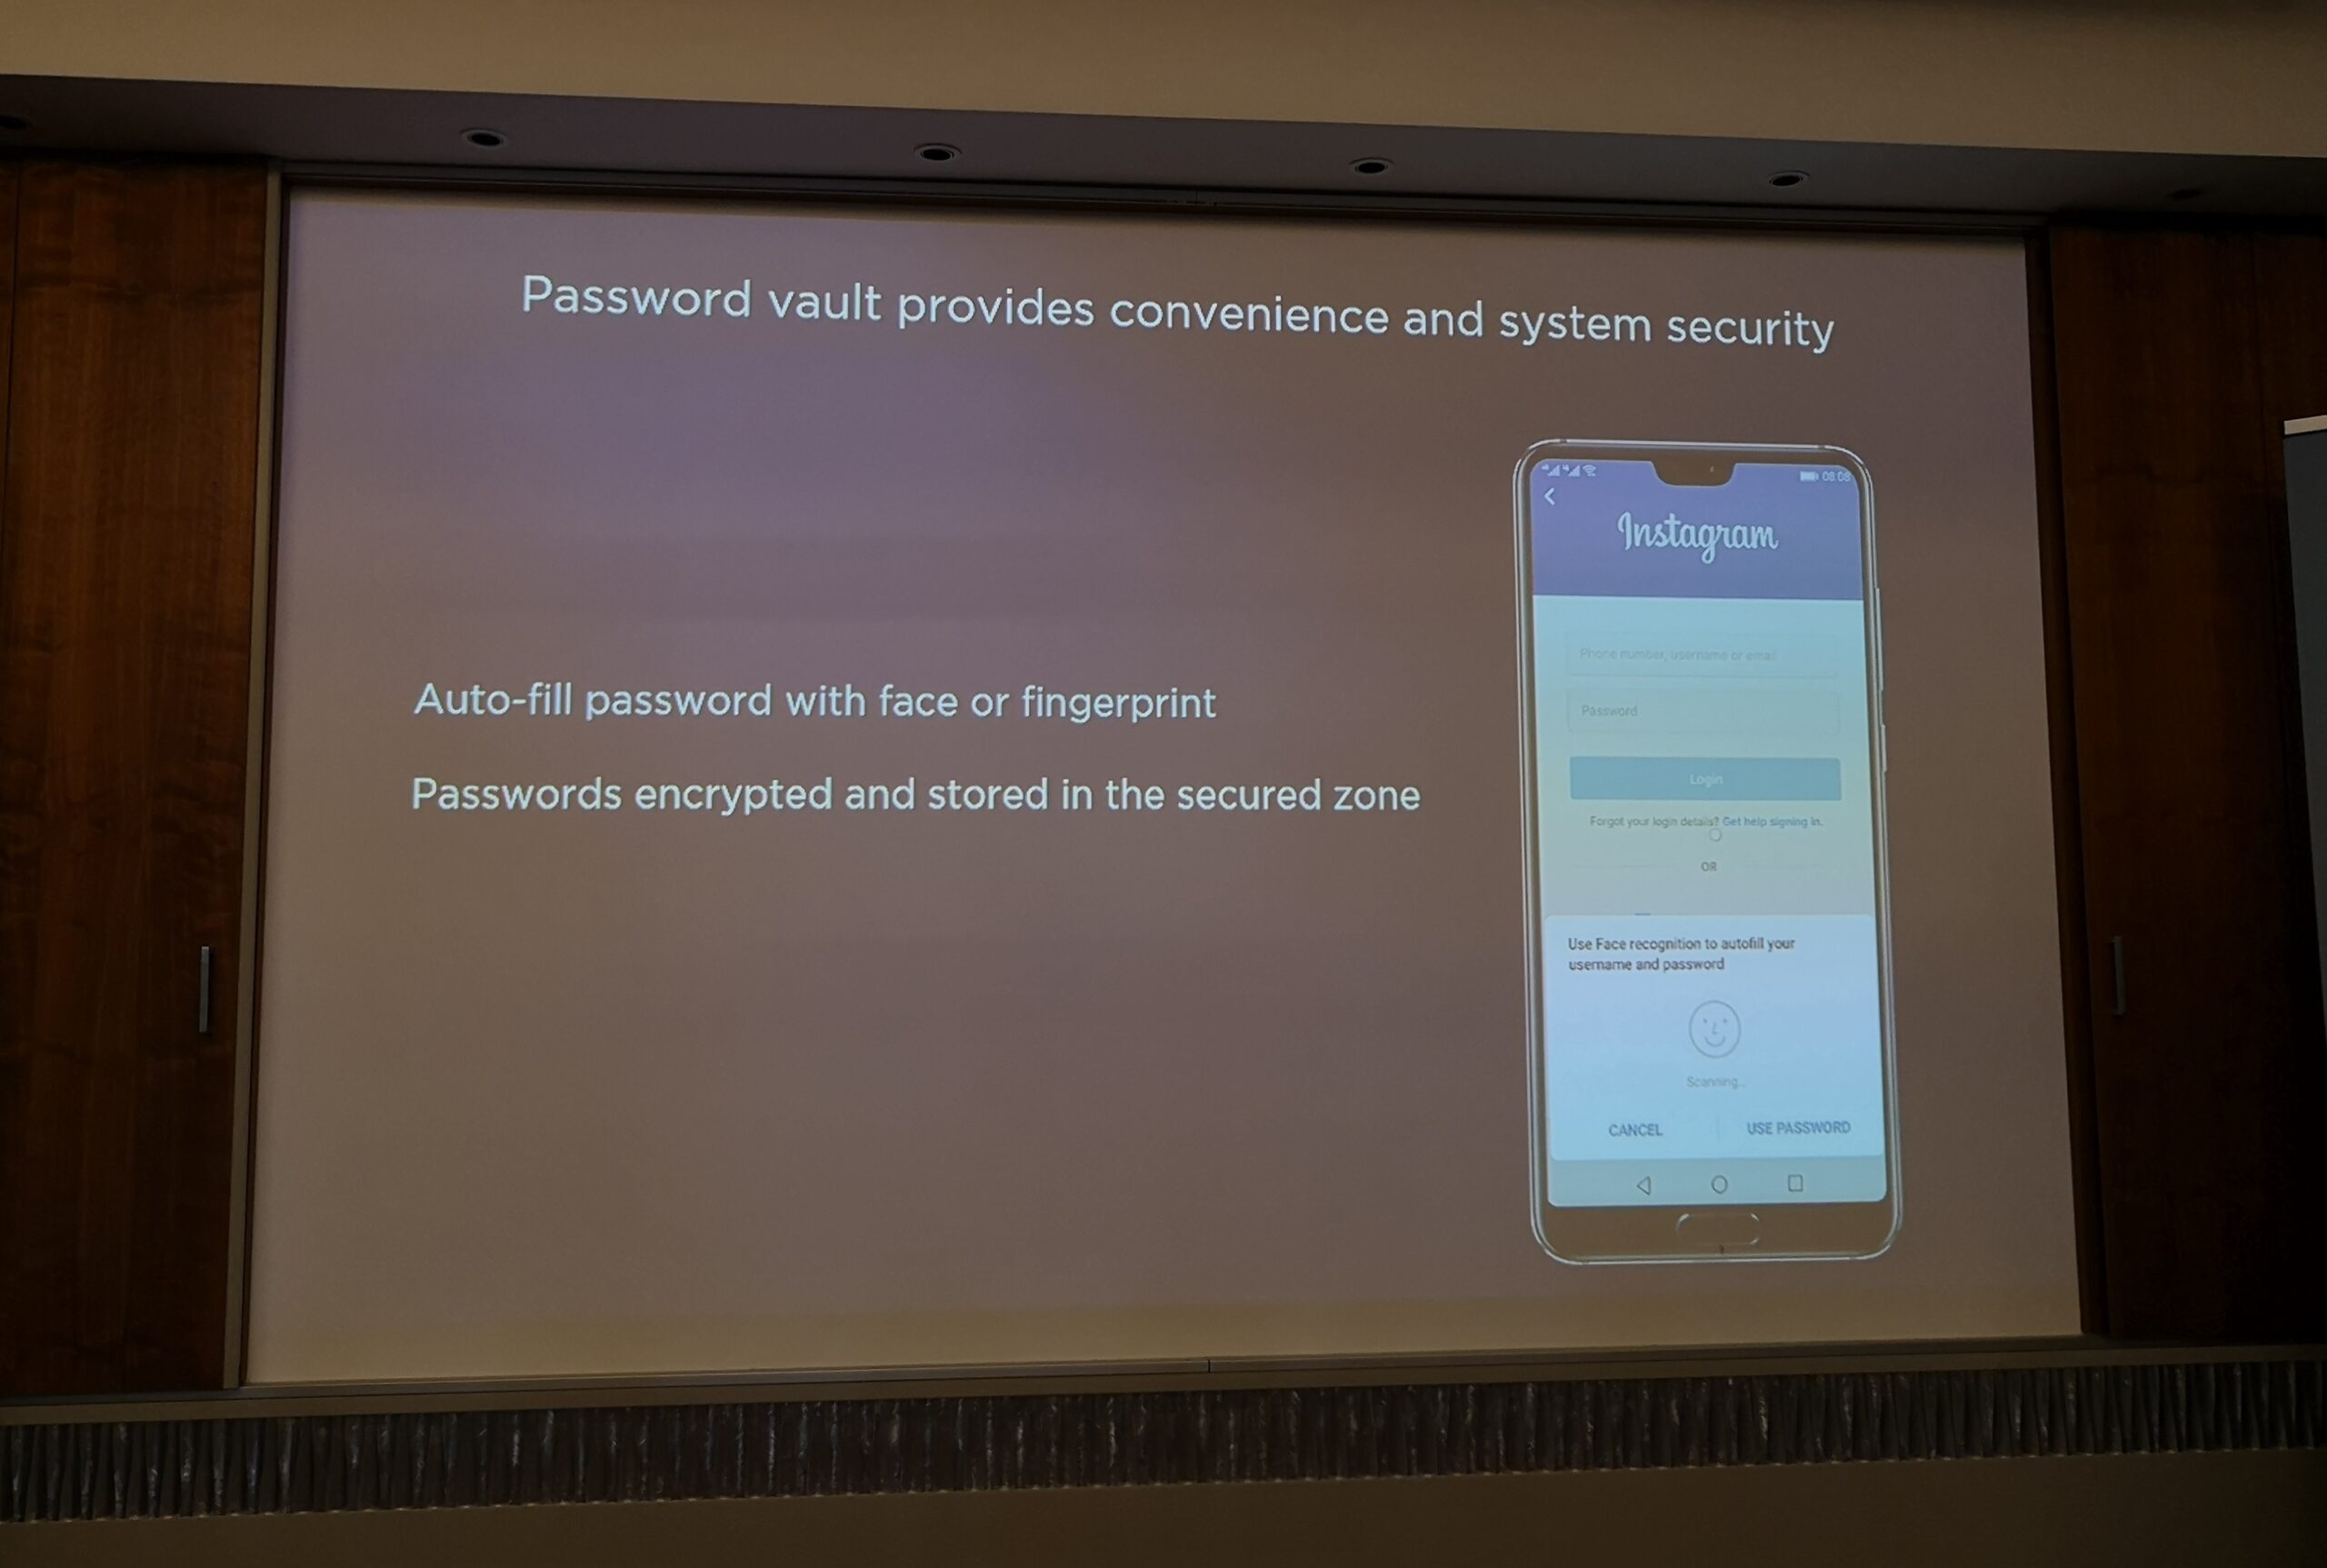 HUAWEI password vault details from a slide.